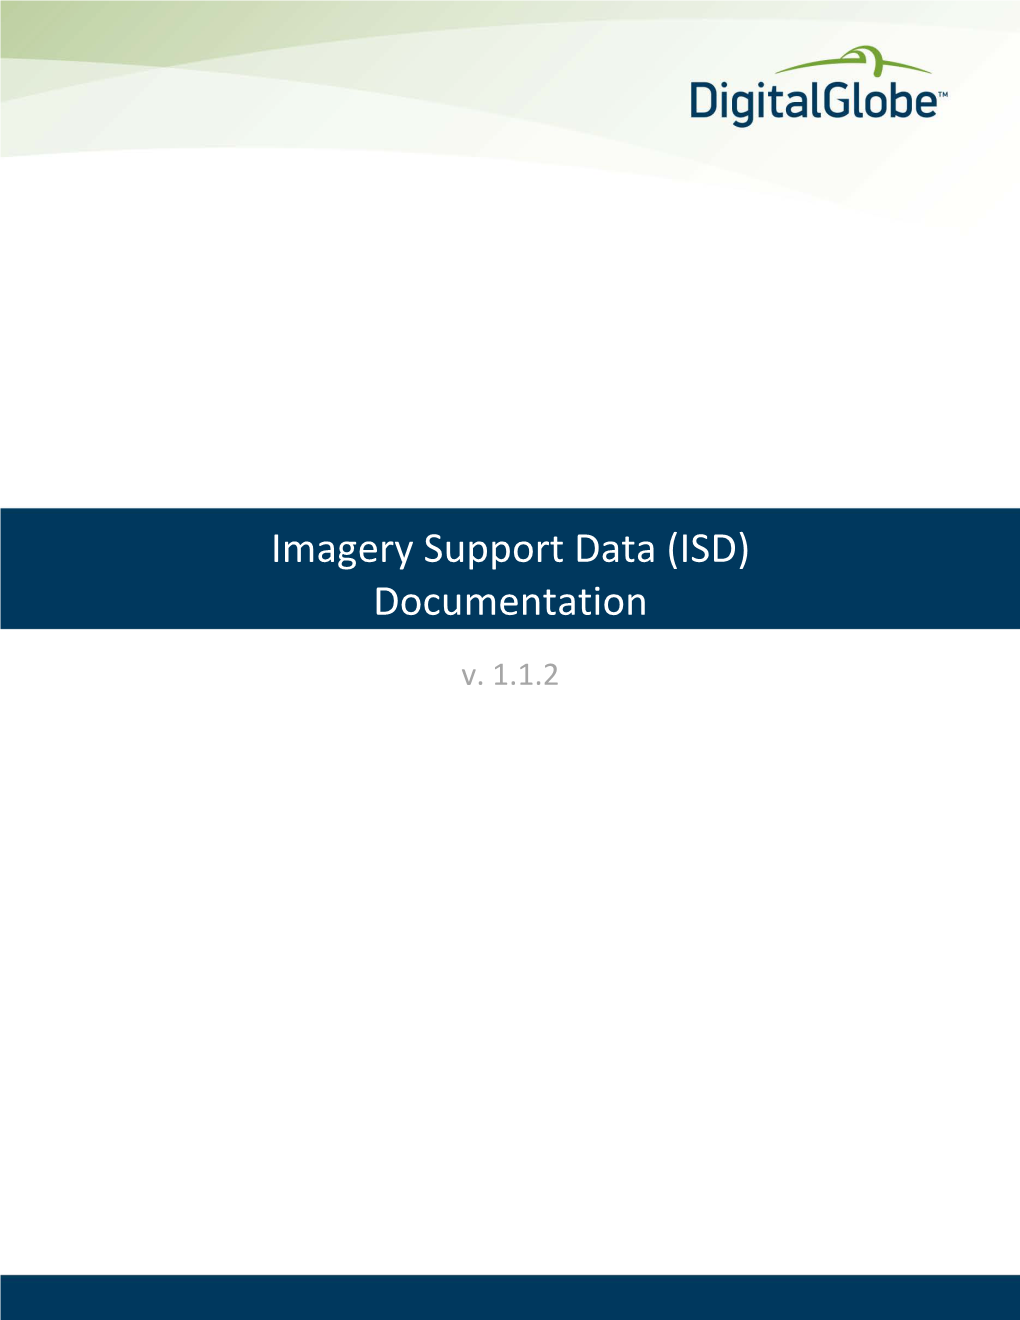 Imagery Support Data (ISD) Documentation